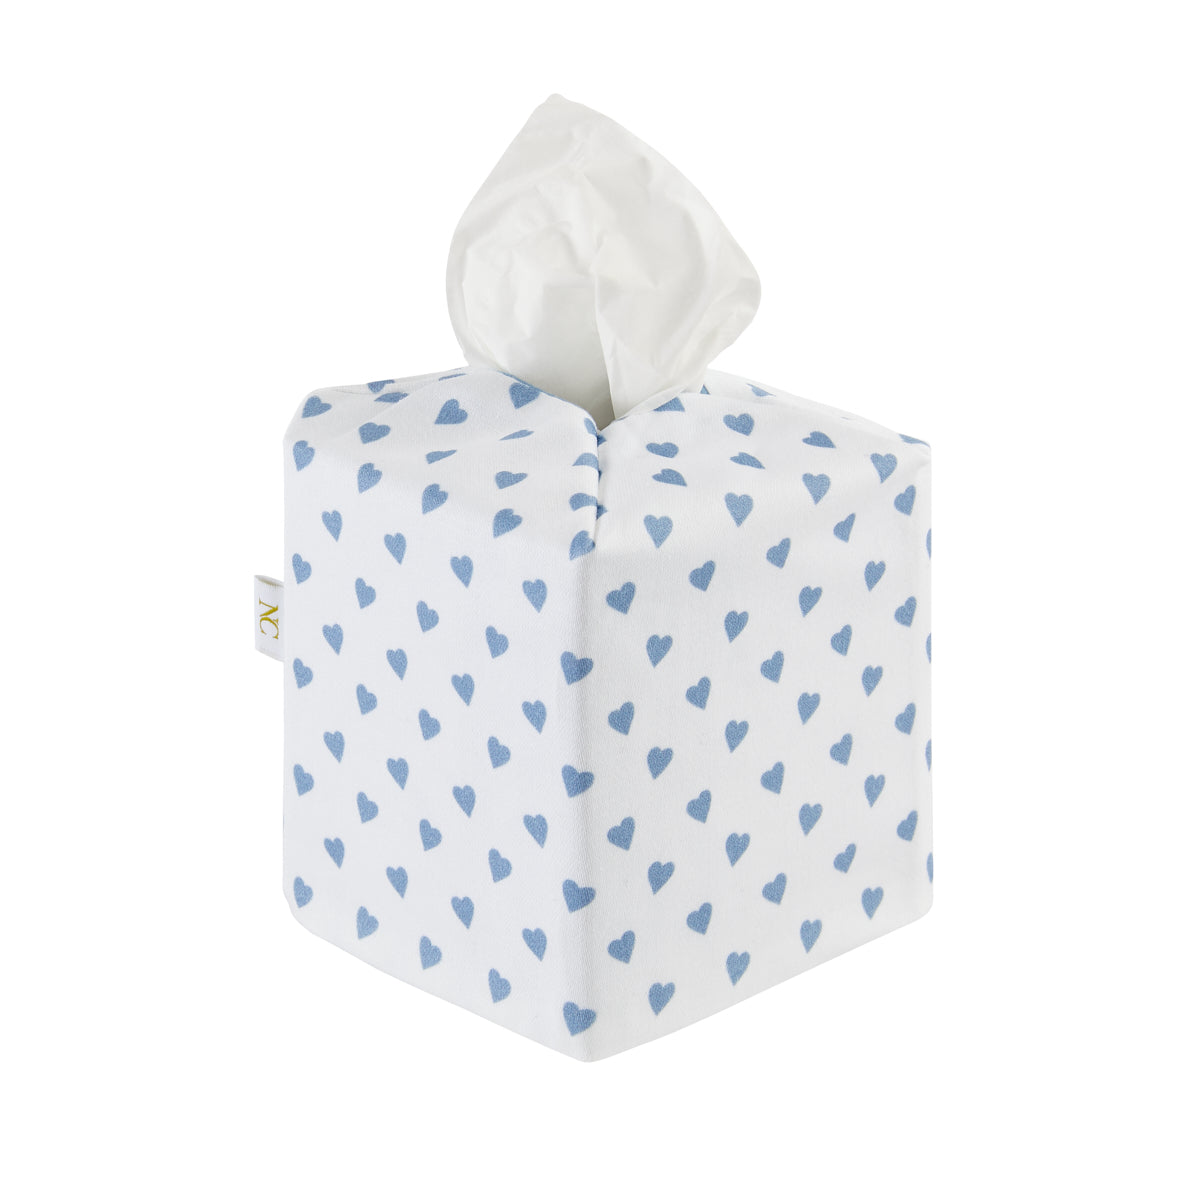 Tissue Box Cover - Heart Blue